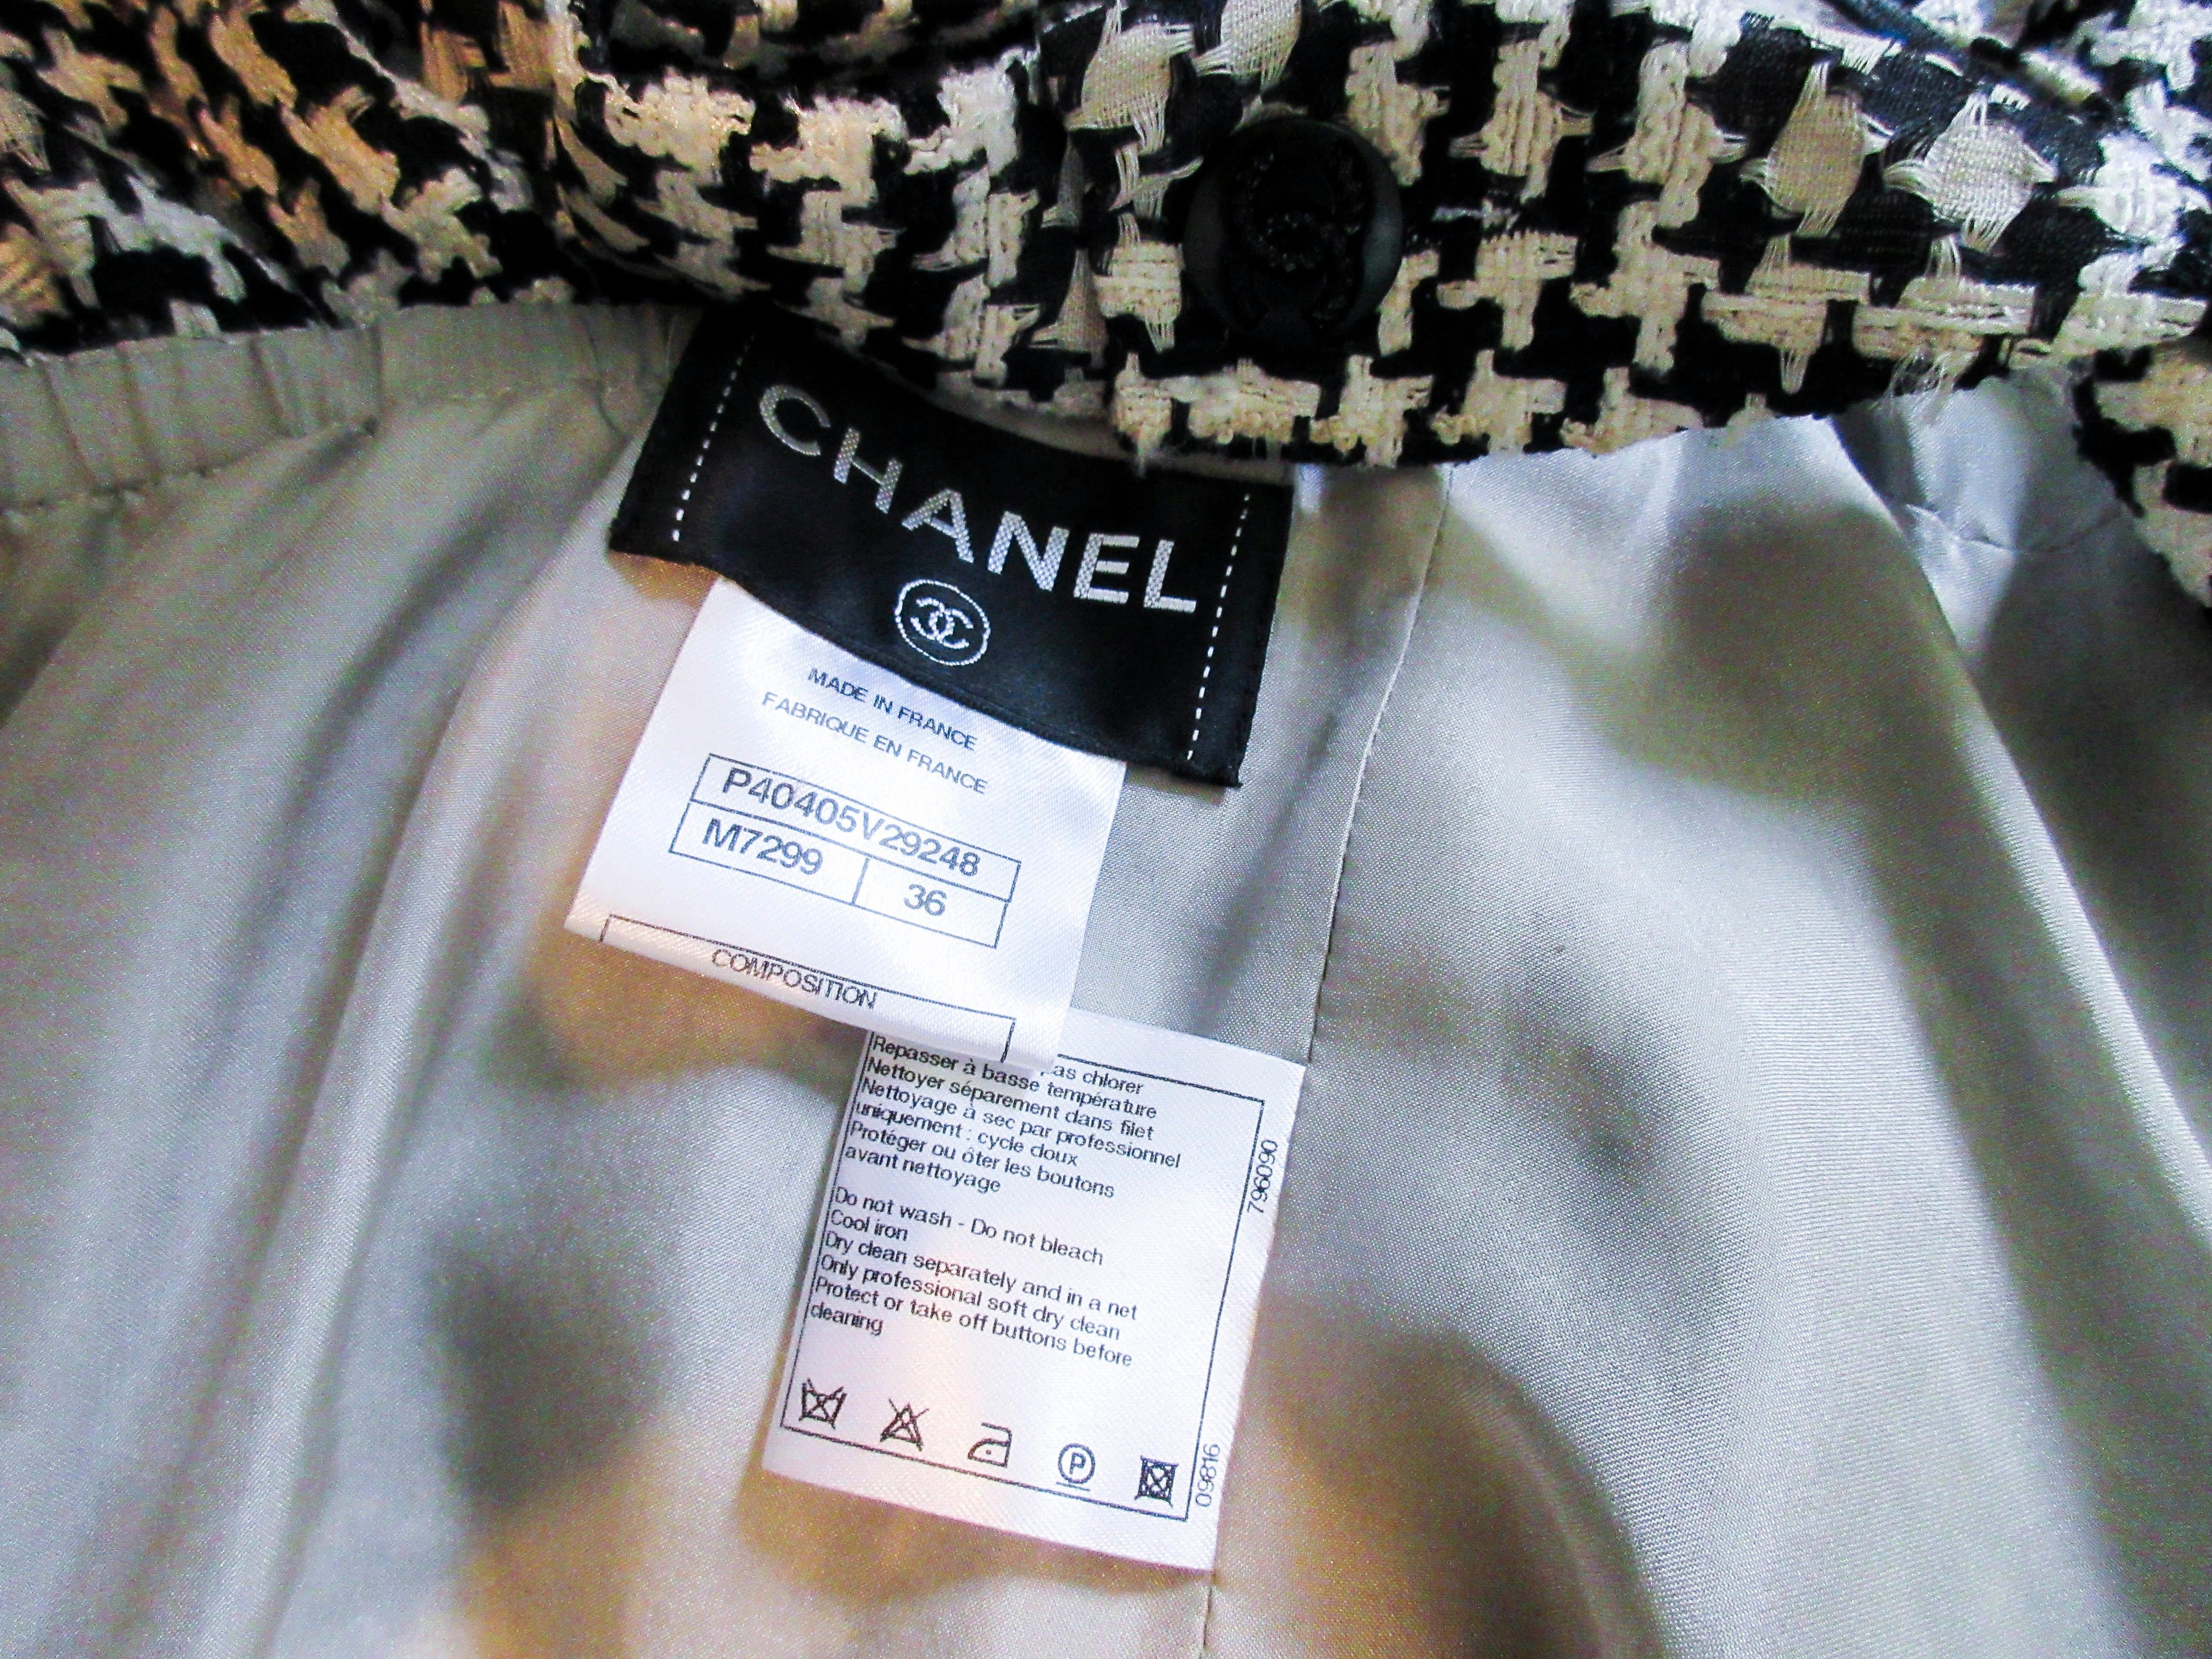 CHANEL Black & White Tweed Criss Cross Back Dress Size 36 8